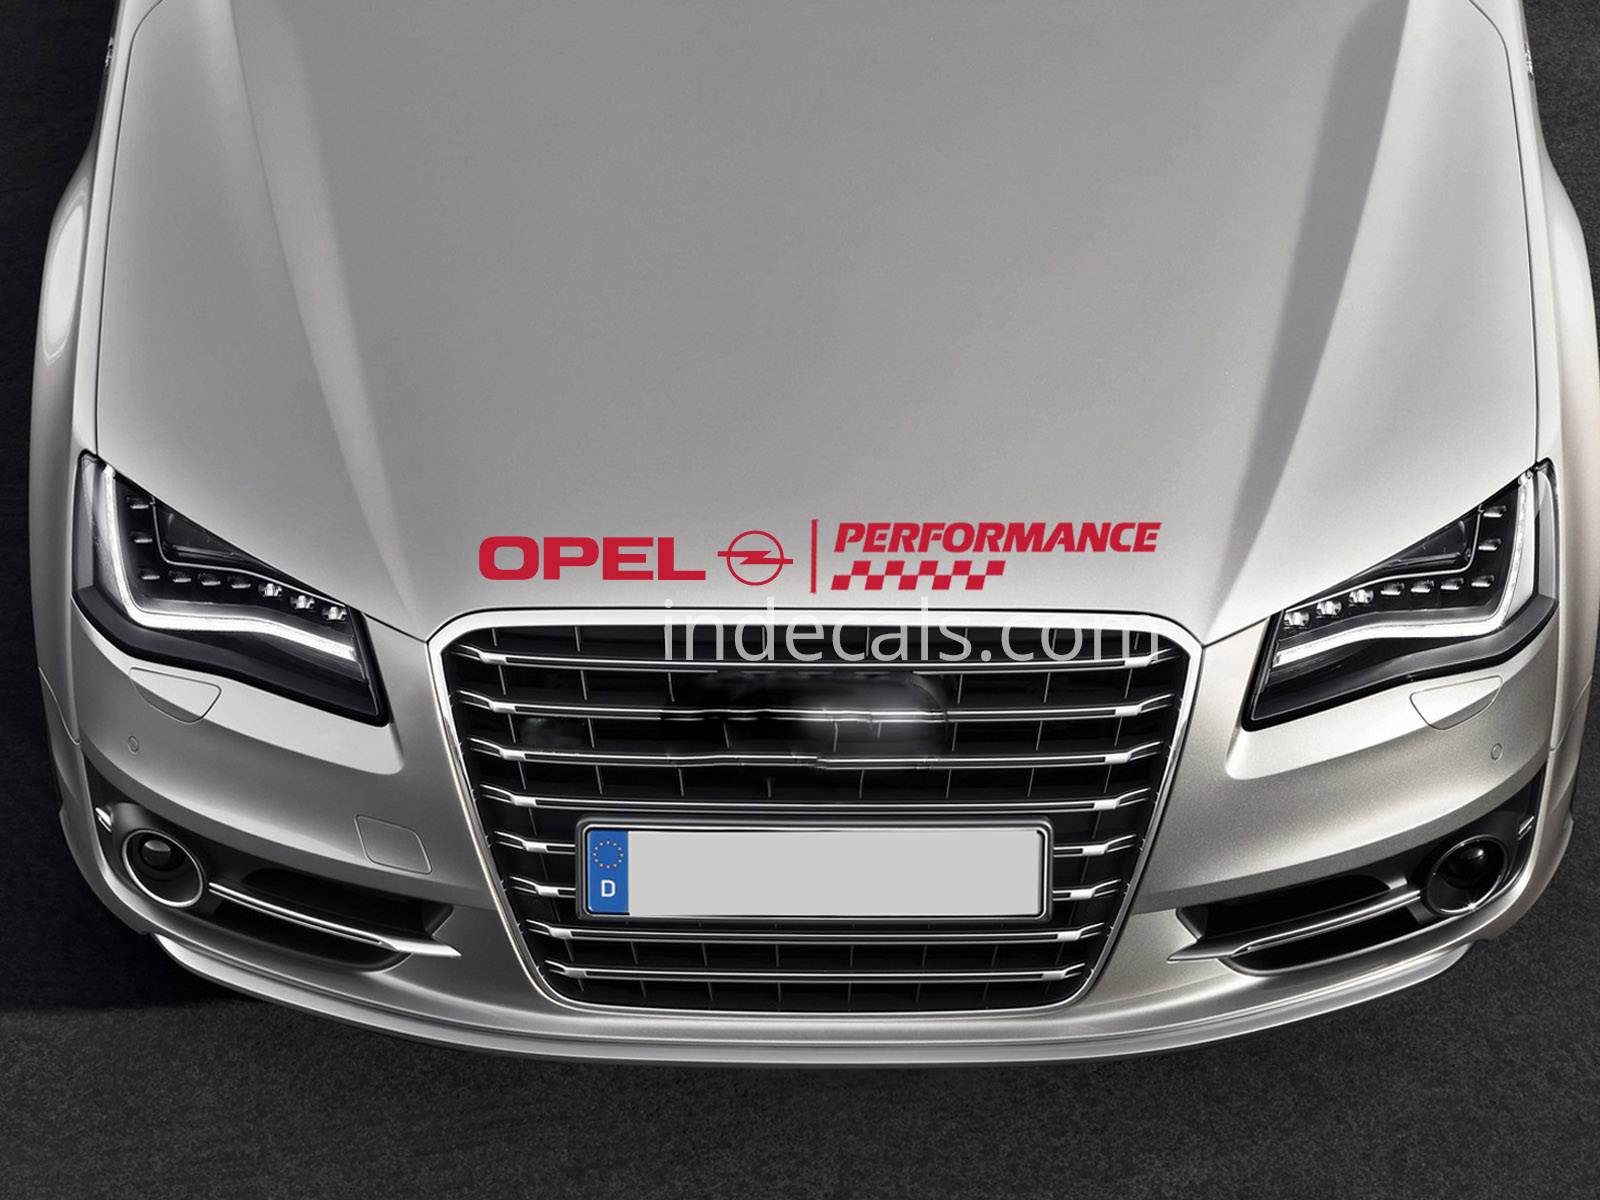 1 x Opel Performance Sticker for Bonnet - Red